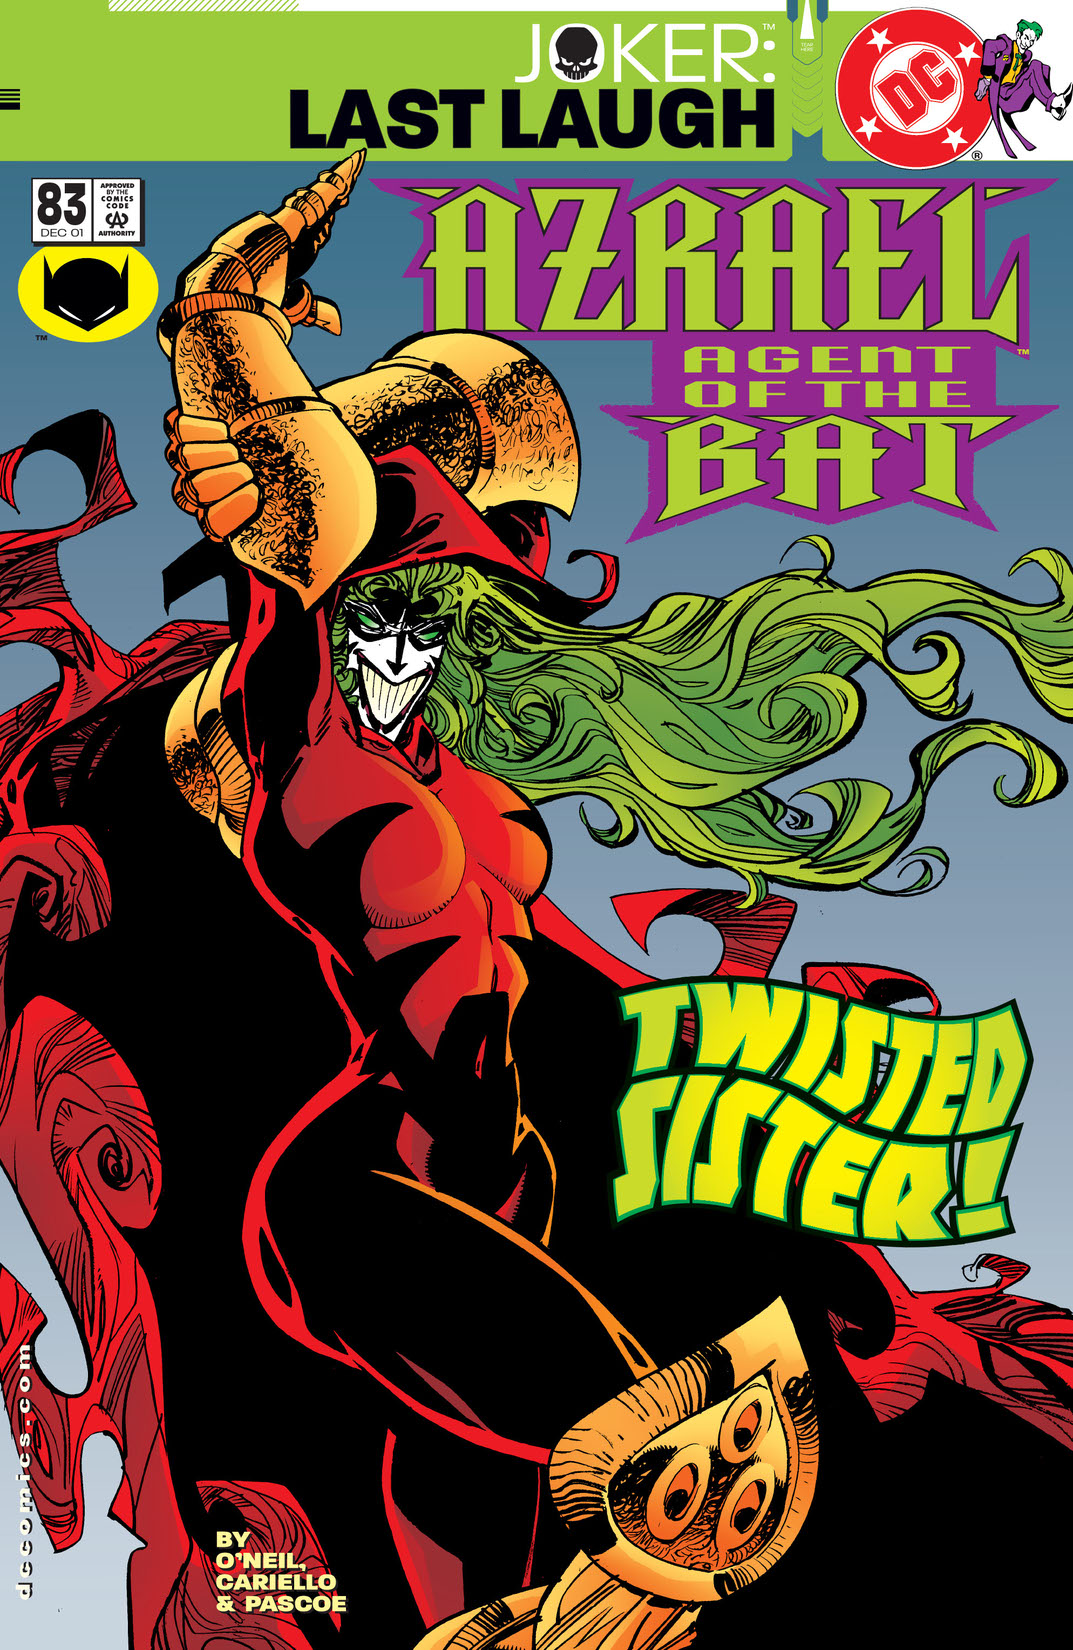 Azrael: Agent of the Bat #83 preview images